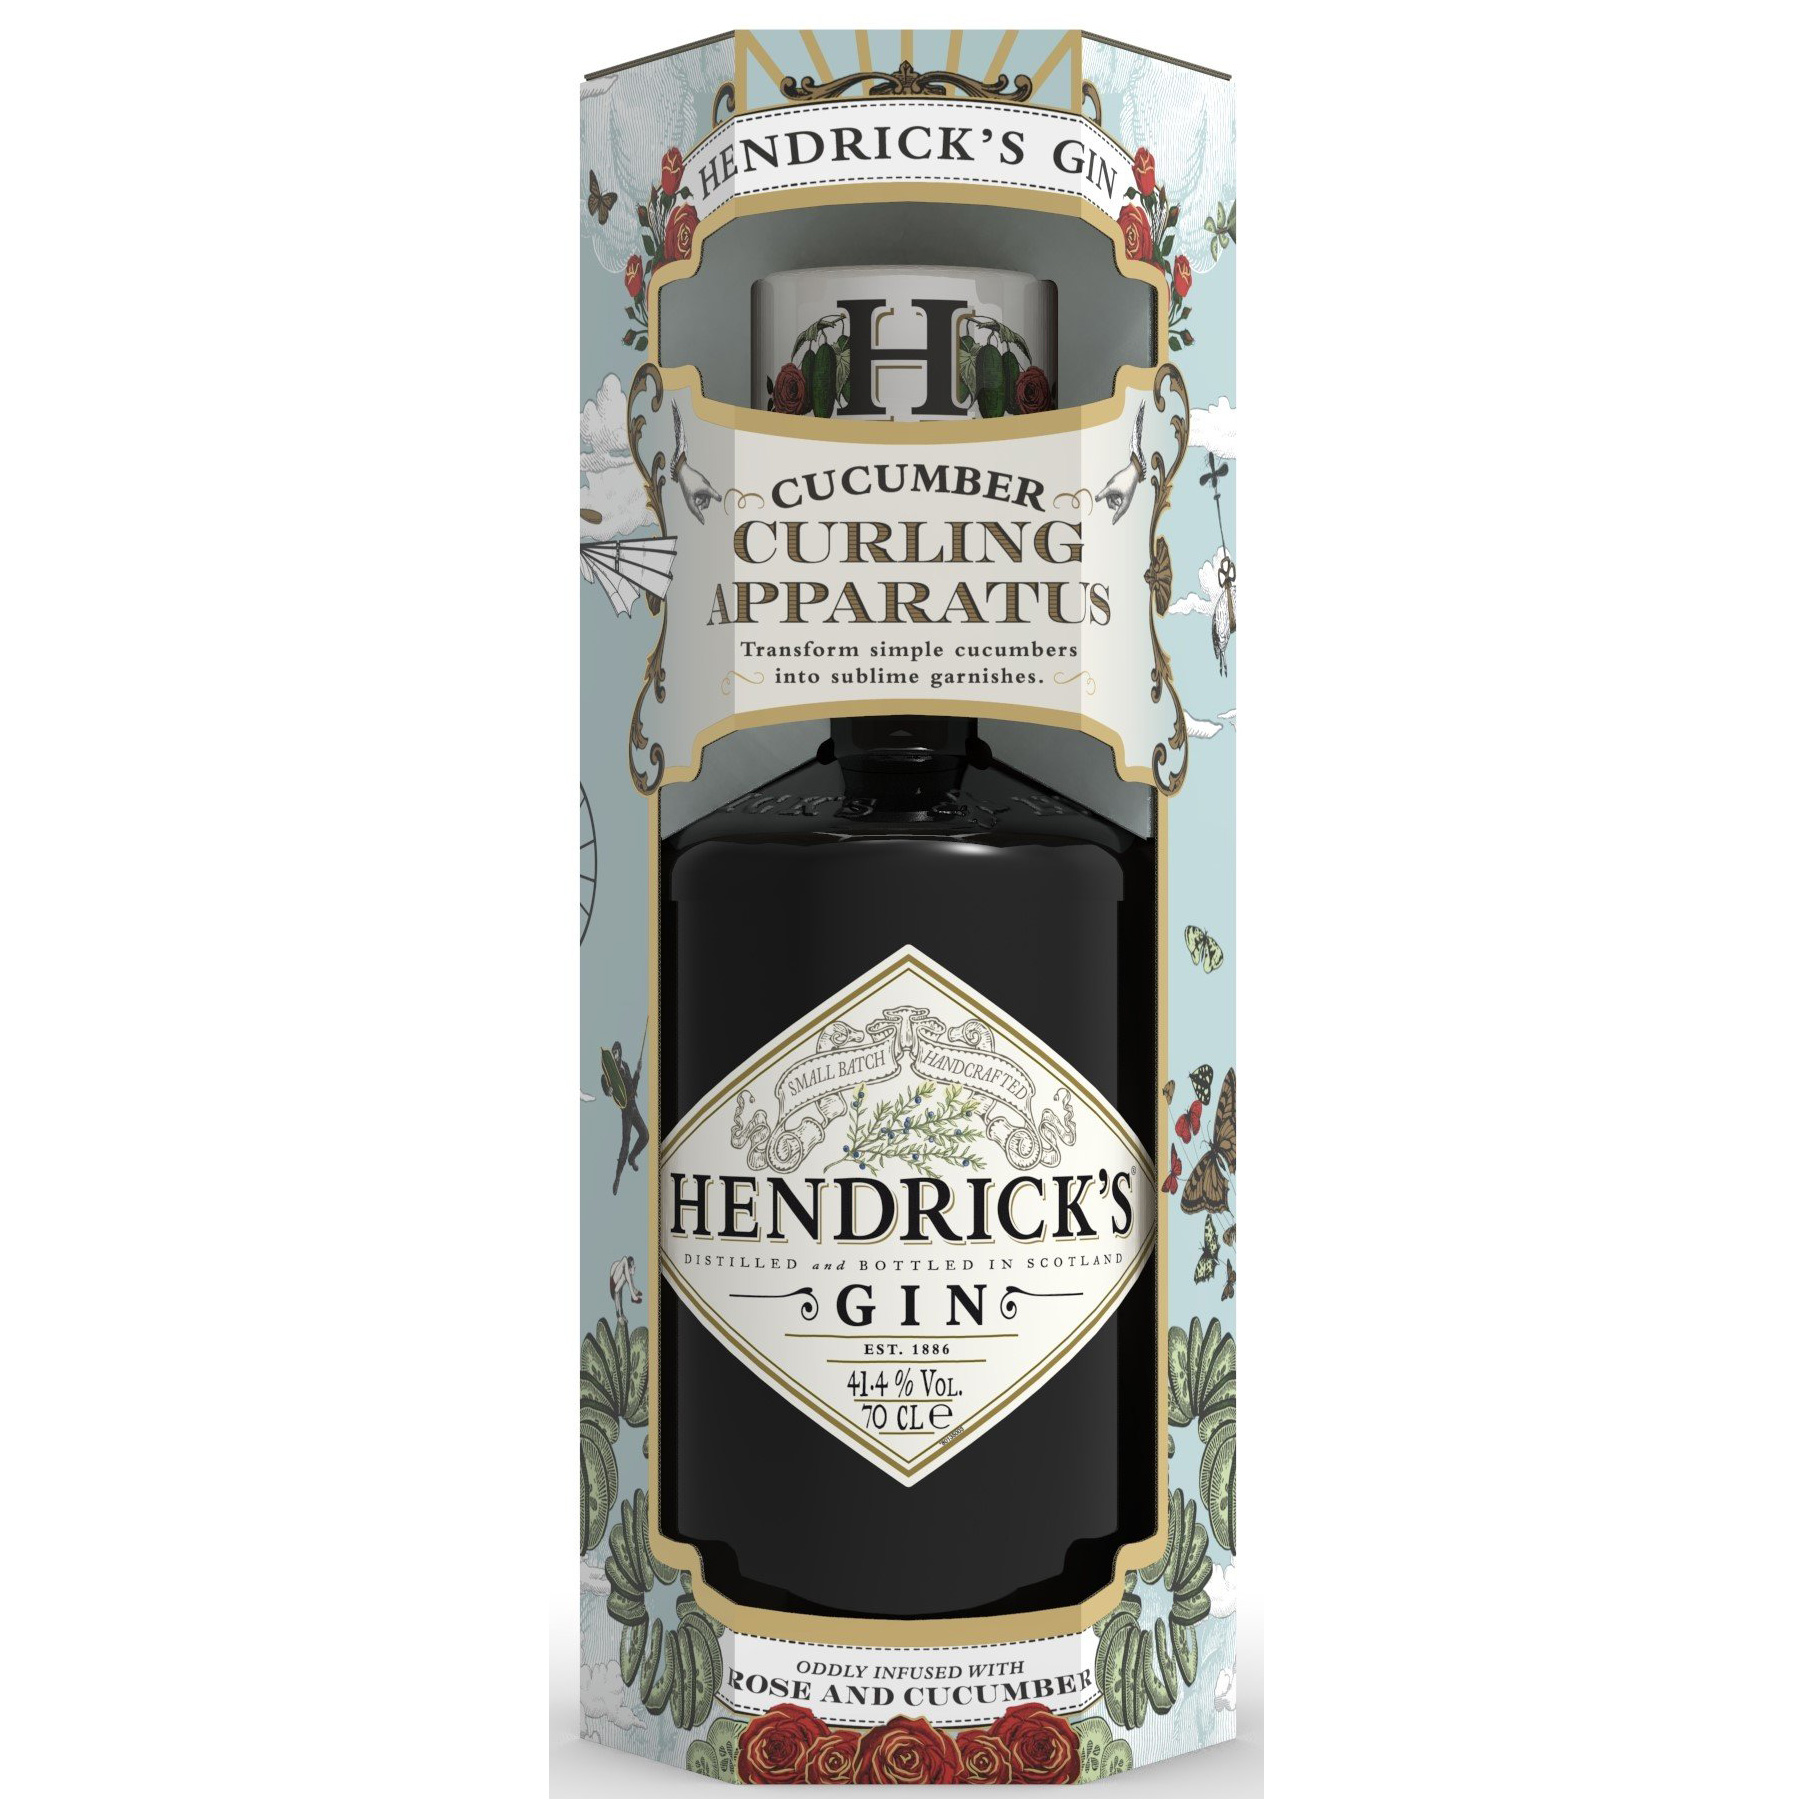 Hendricks Gin 70cl Cucumber Curler Gift Box Buy online for nationwide